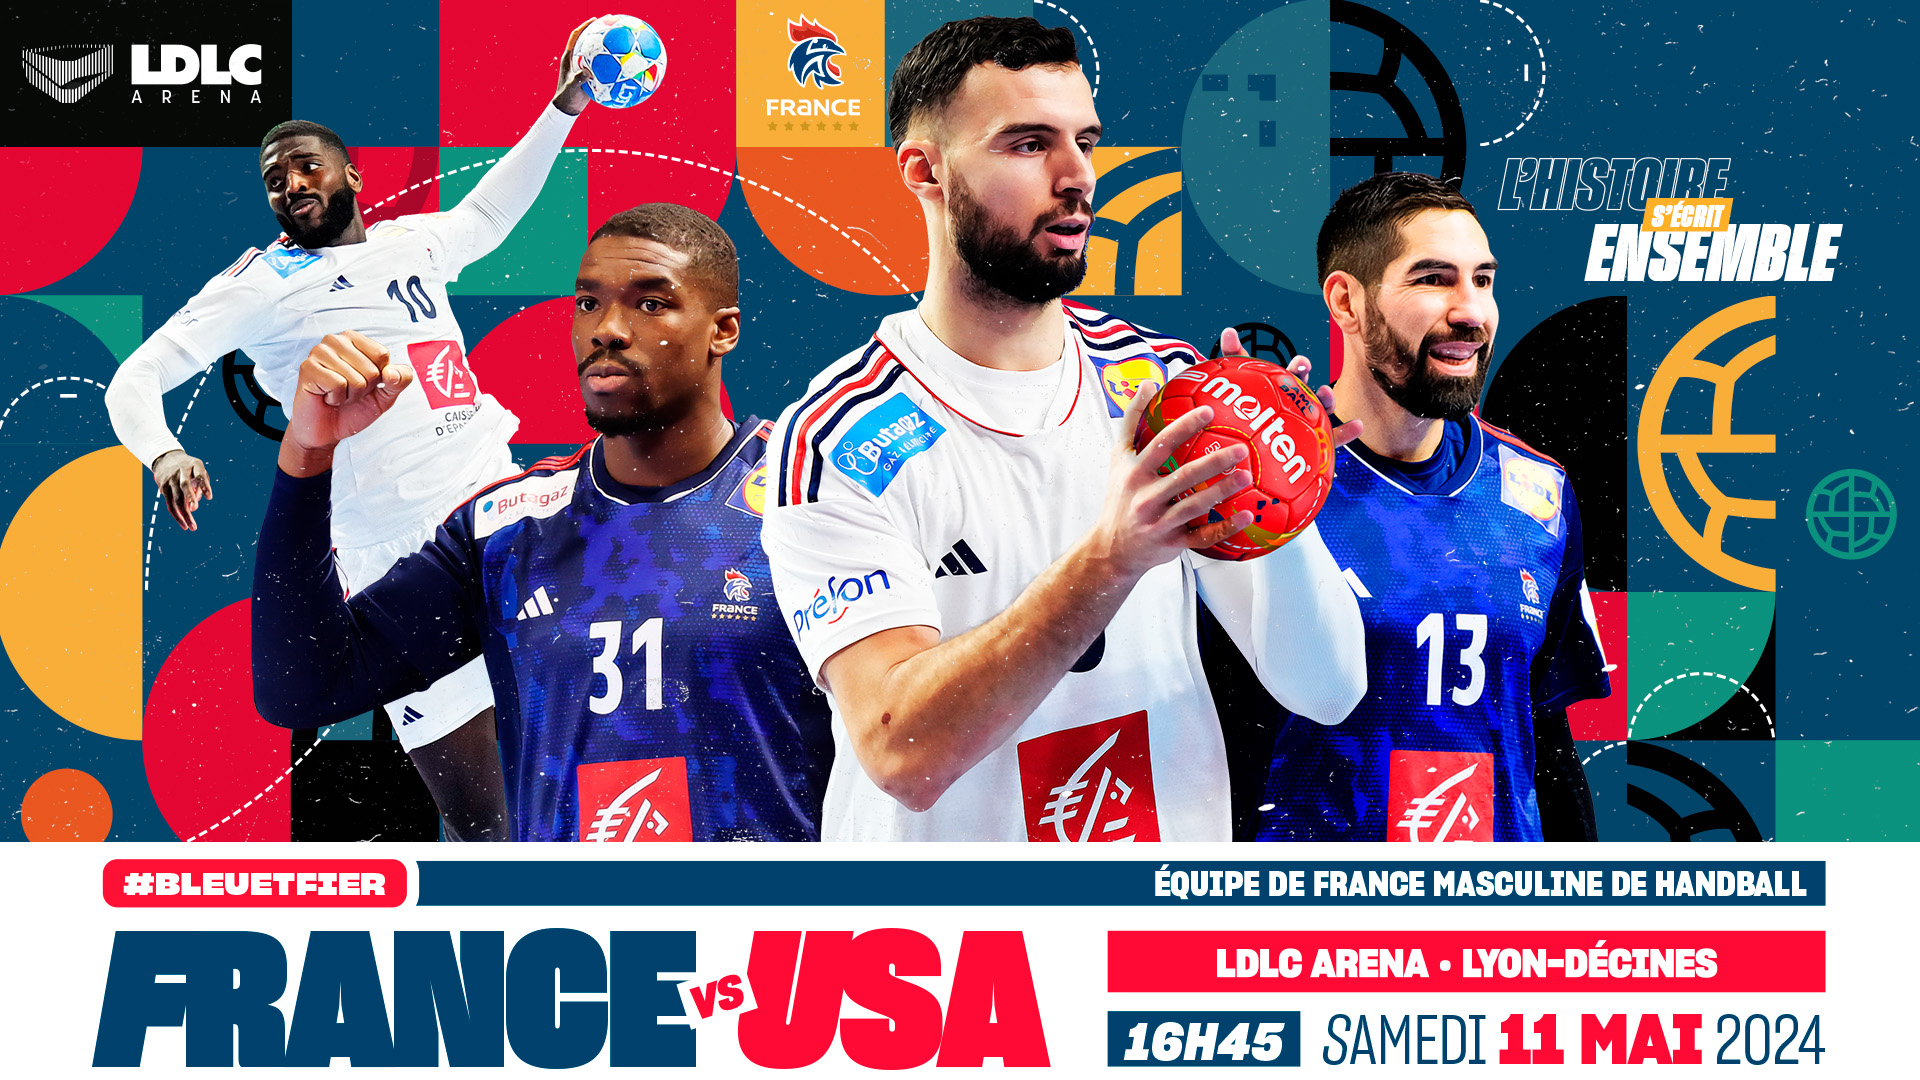 France vs. Etats Unis | Match Amical